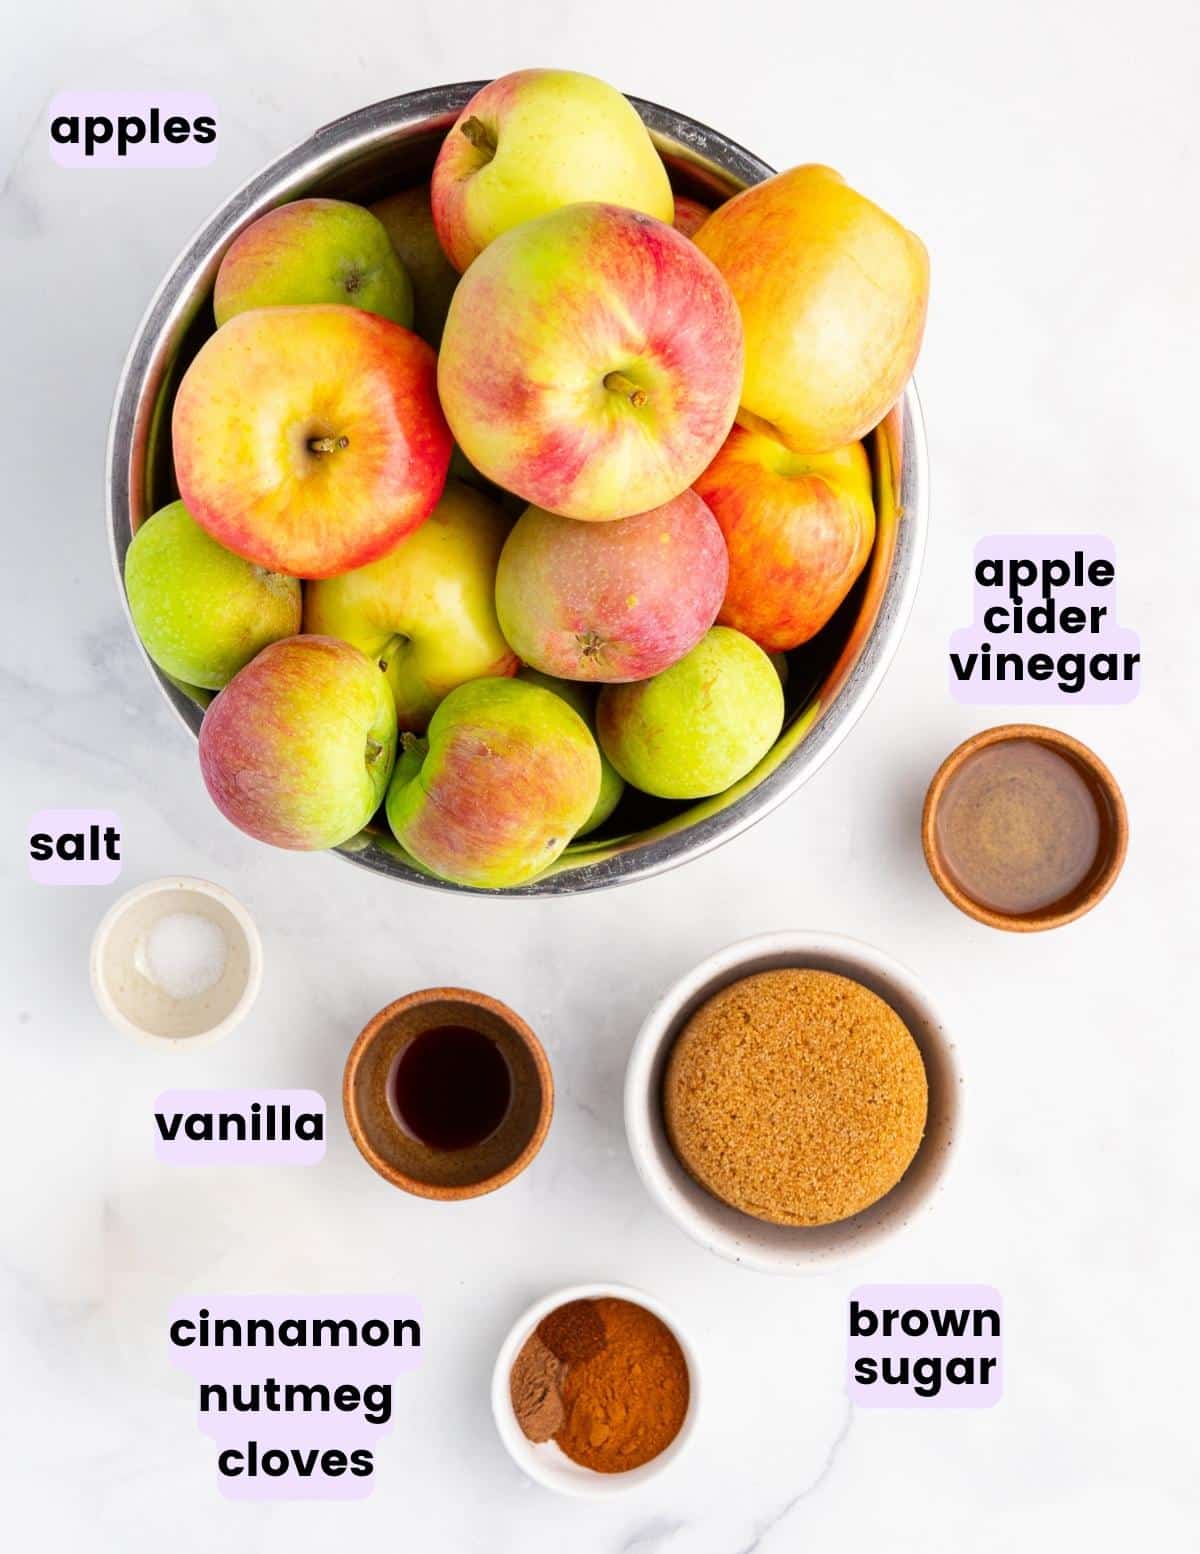 apples, apple cider vinegar, brown sugar, salt, vanilla, spices